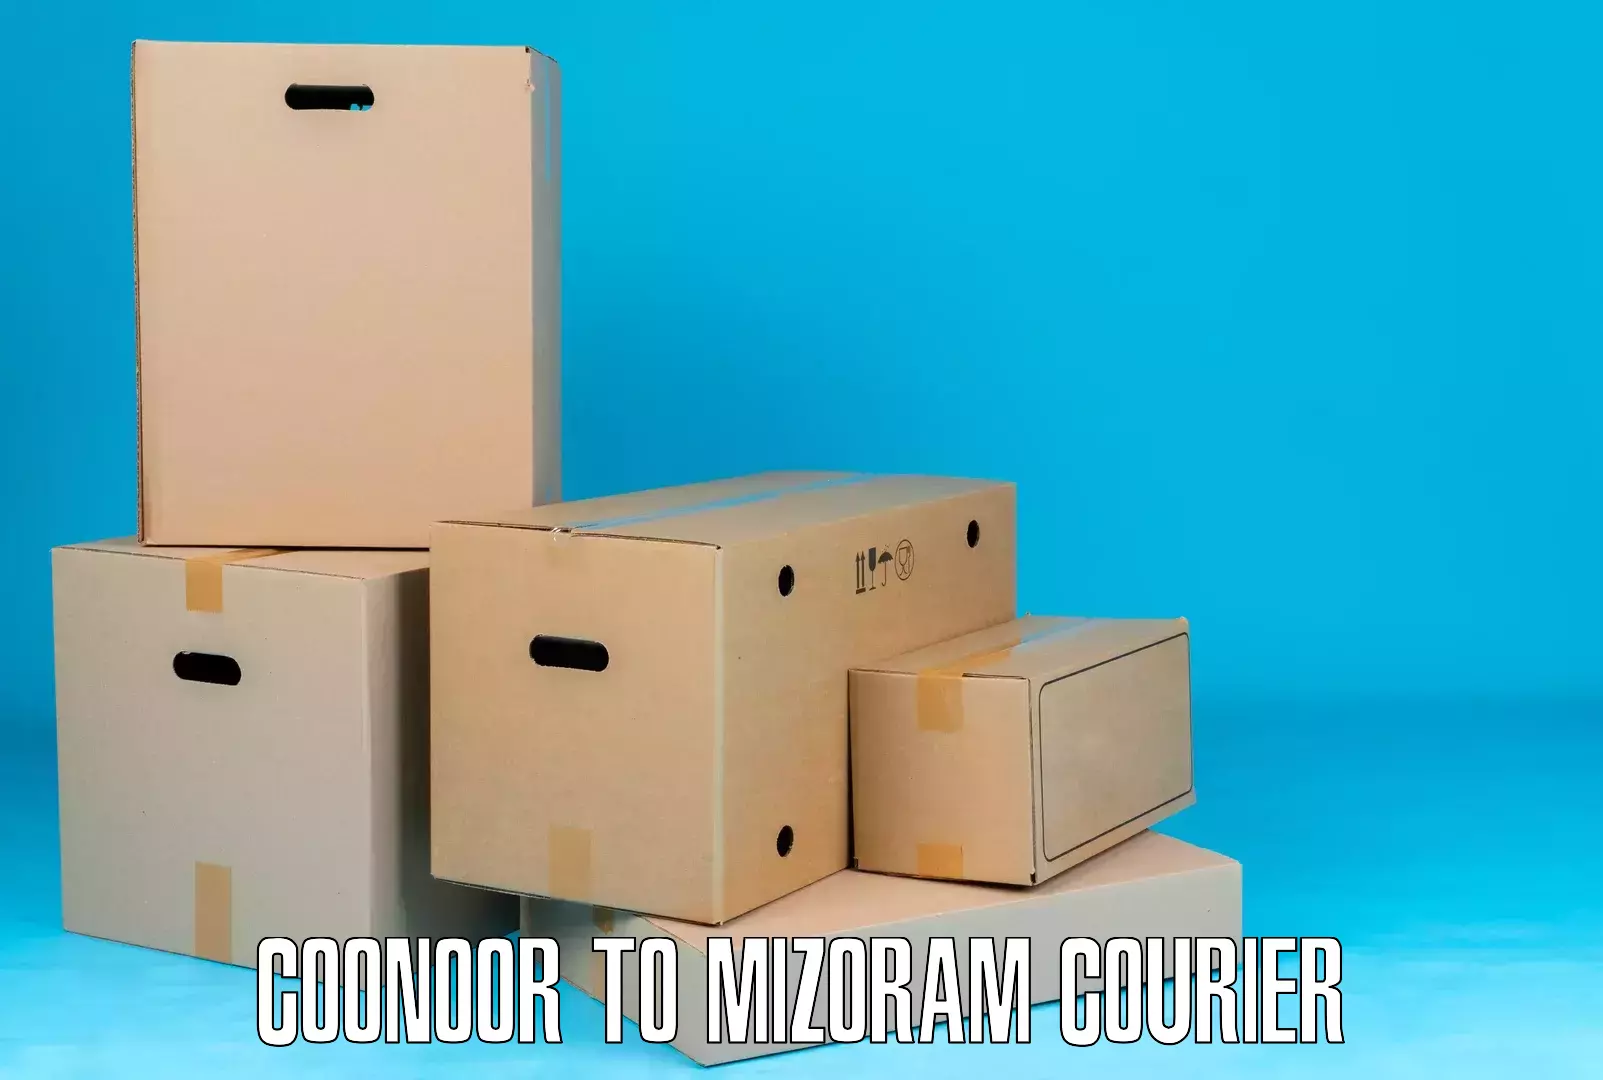 User-friendly delivery service in Coonoor to Mizoram